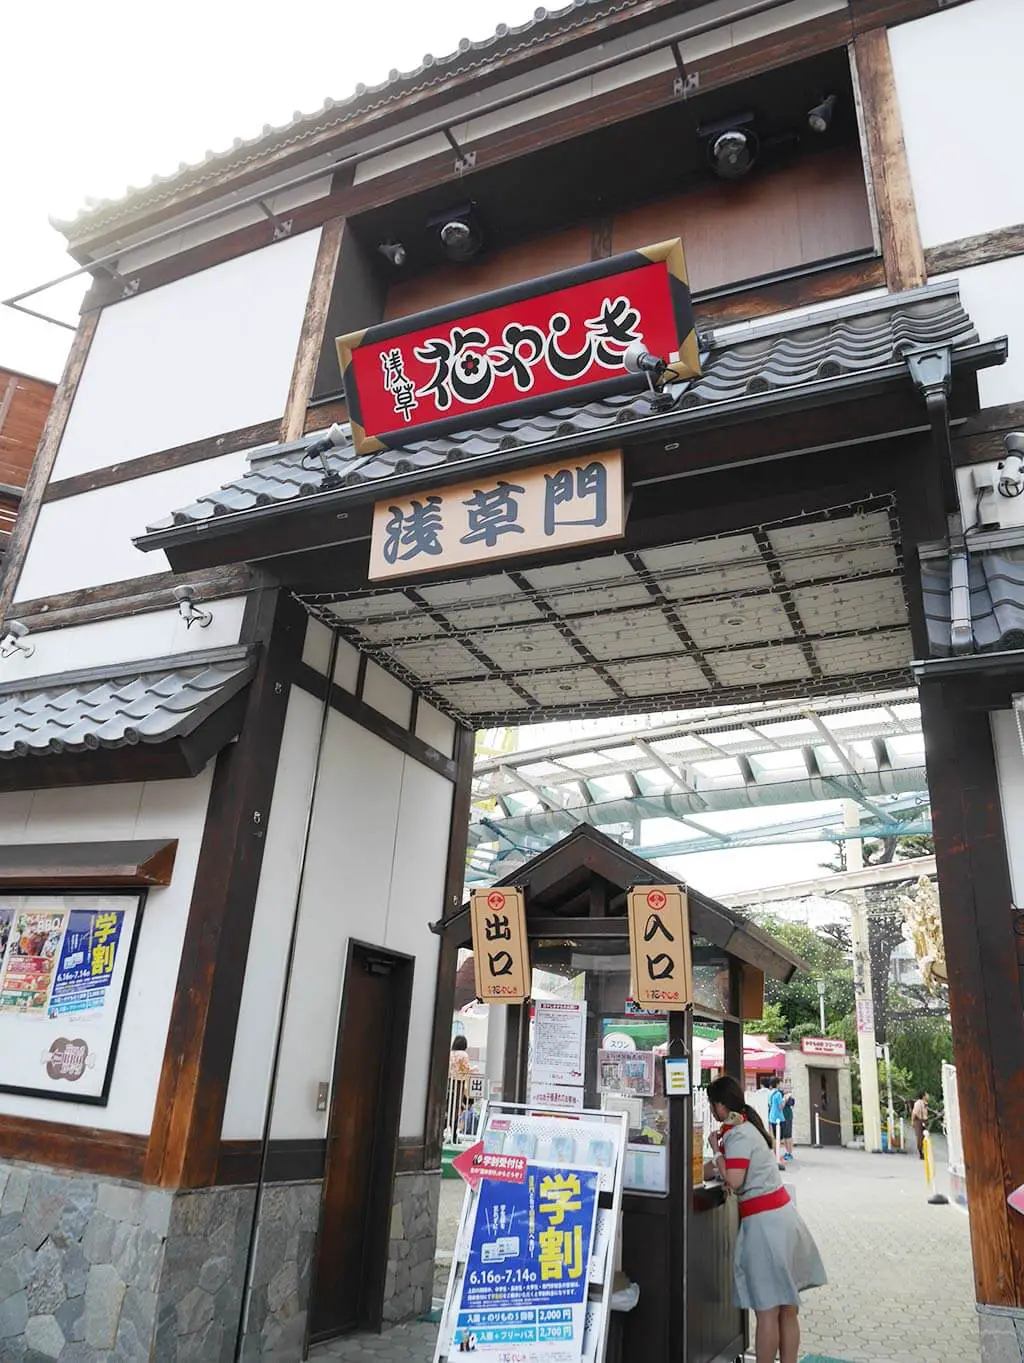 Entrance to Hanayashiki theme park, asakusa, taito, tokyo, japan | Laugh Travel Eat